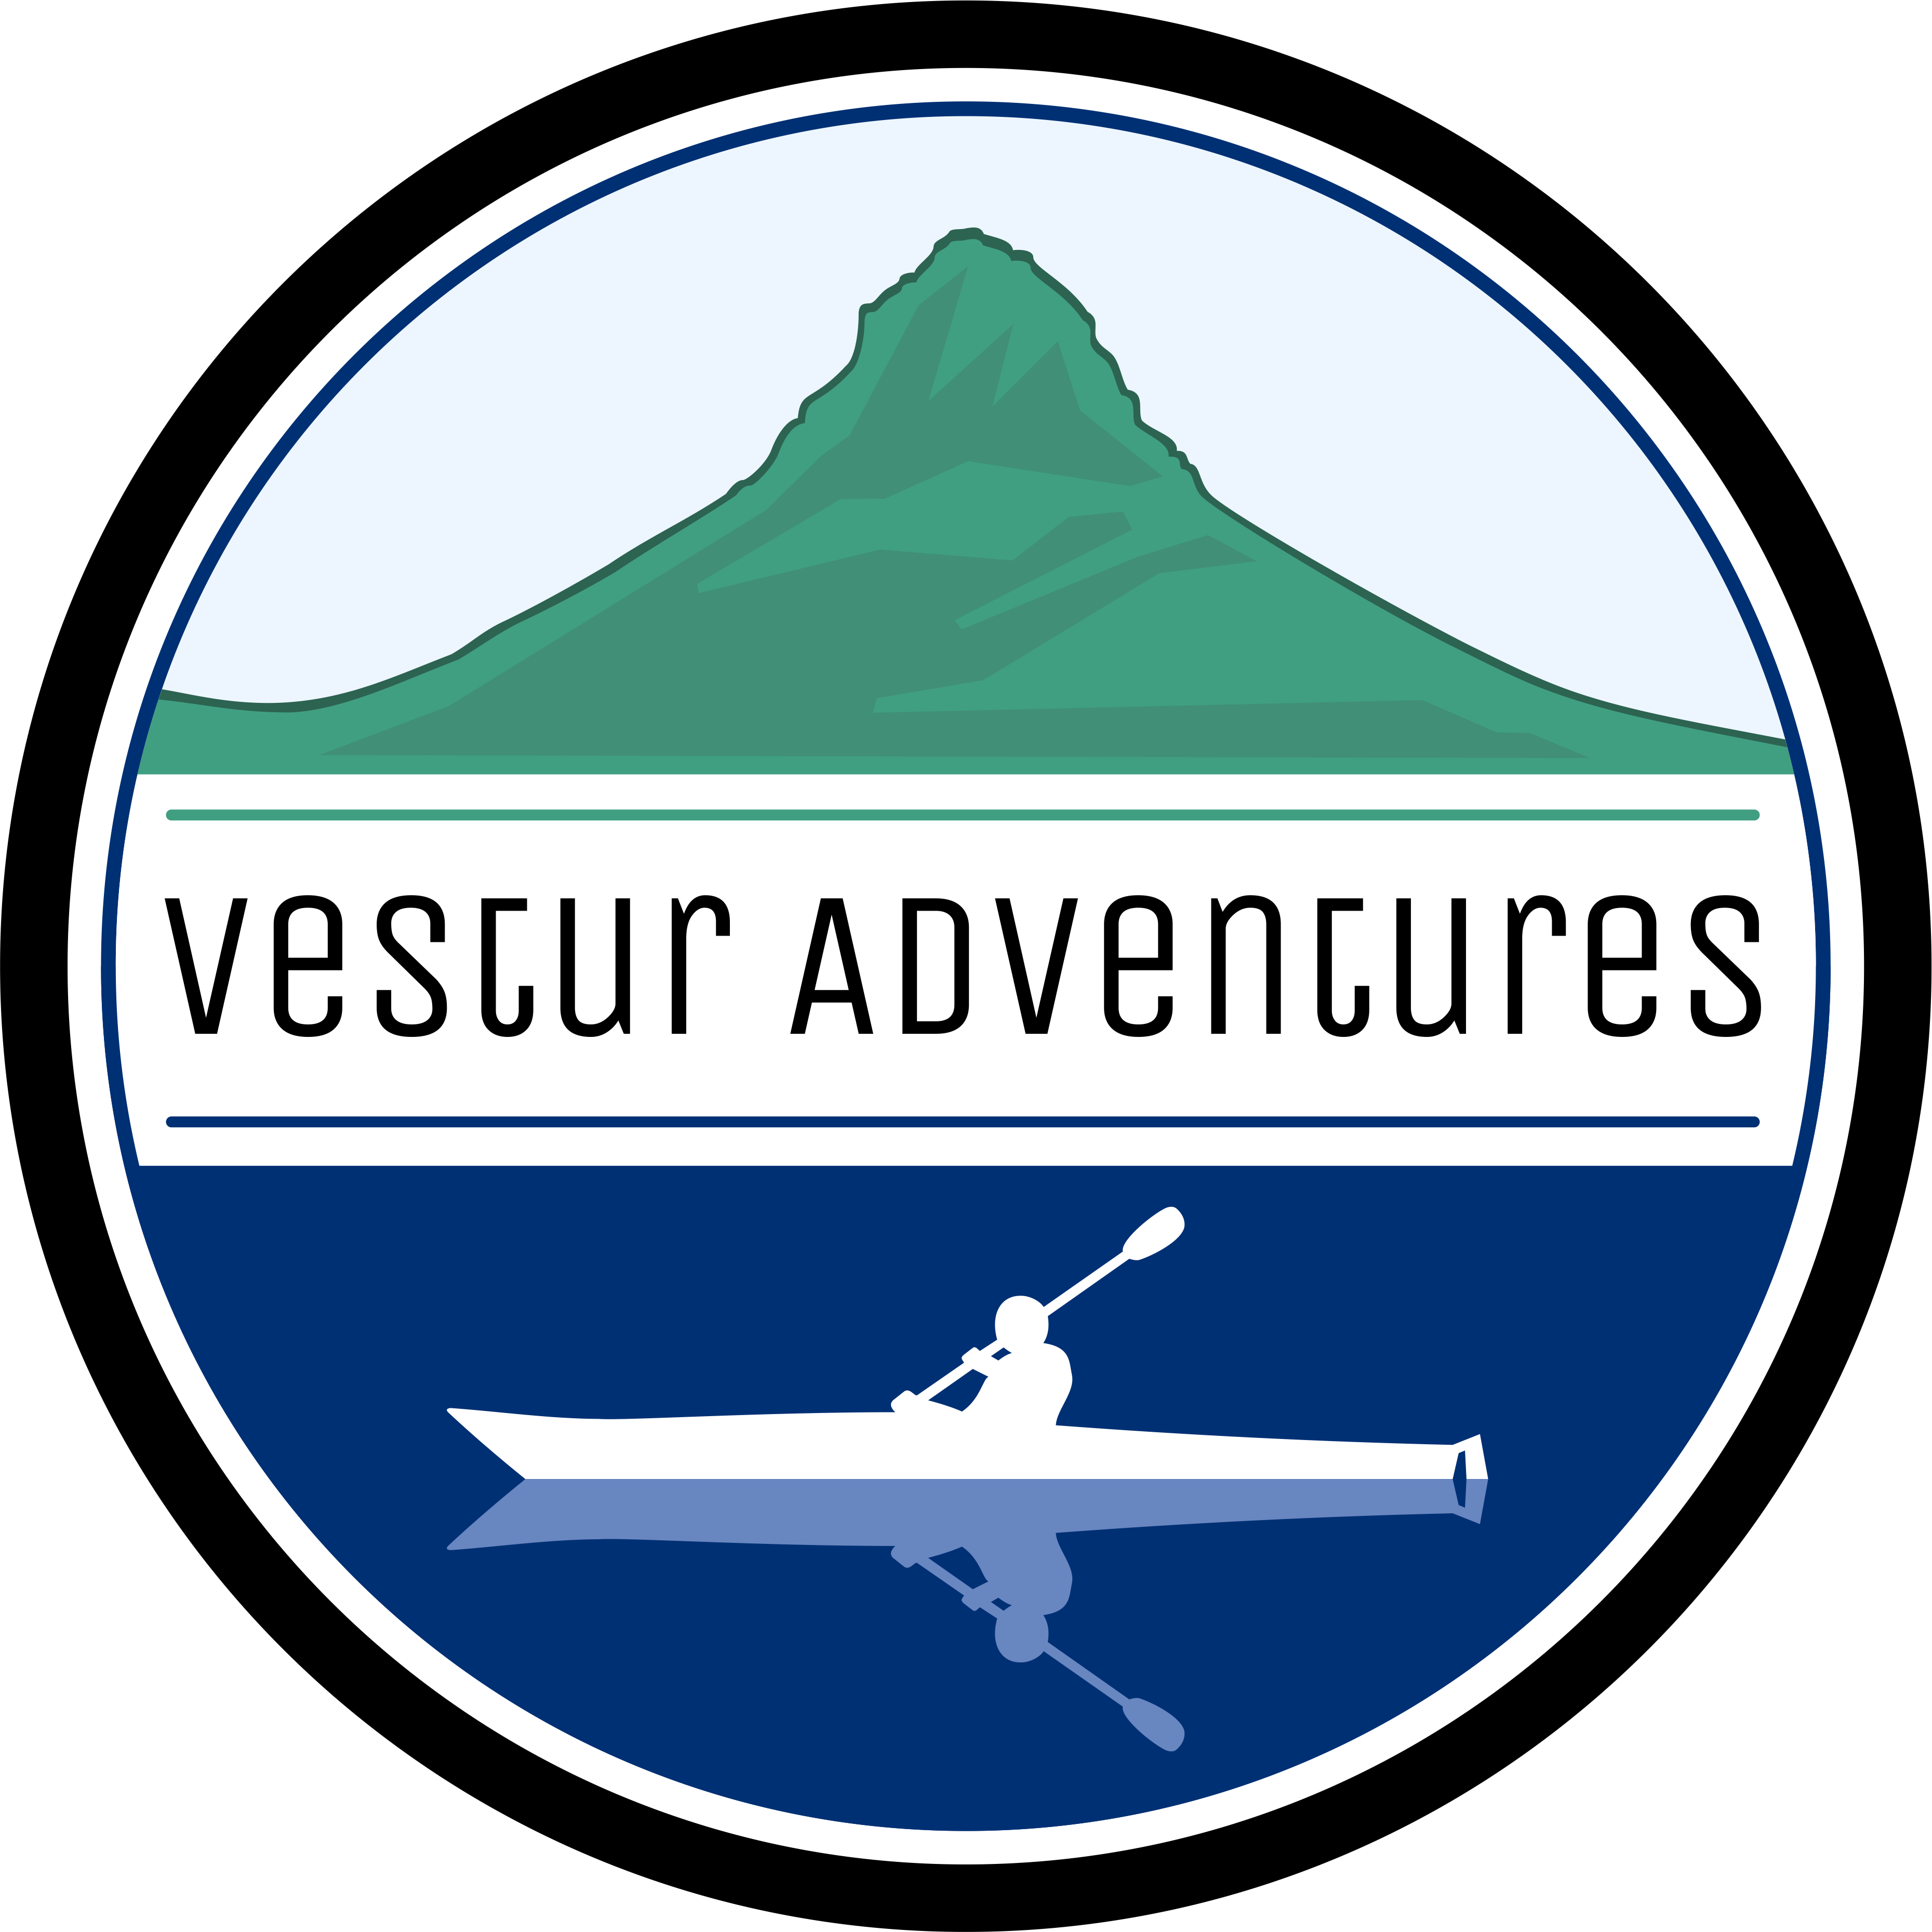 Vestur Adventures Valið merki PNG.png